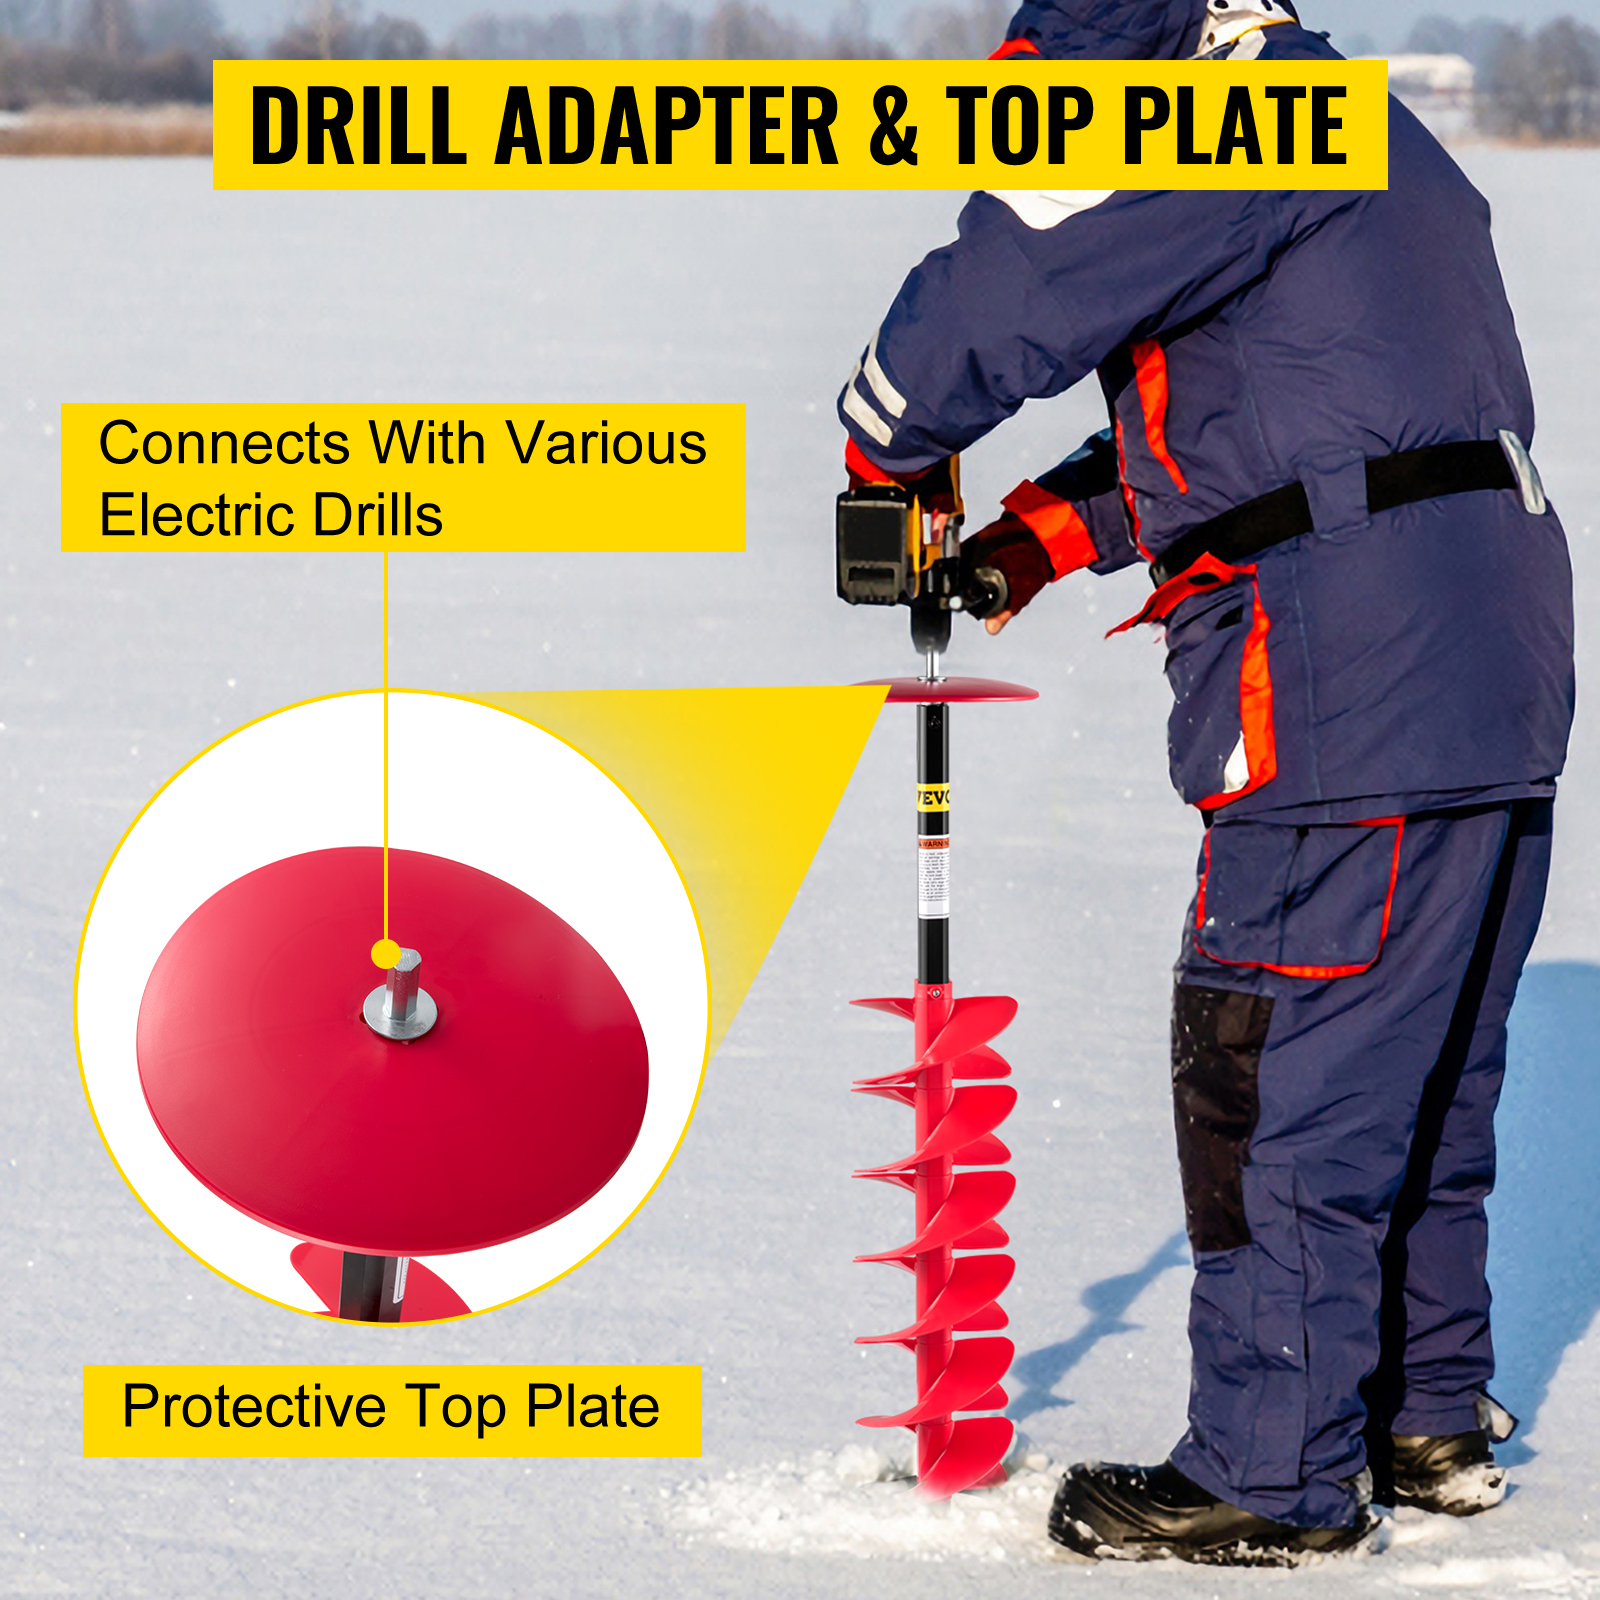 VEVOR Ice Drill Auger, 8'' Diameter Nylon Ice Auger, 41'' Length Ice Auger  Bit, Auger Drill